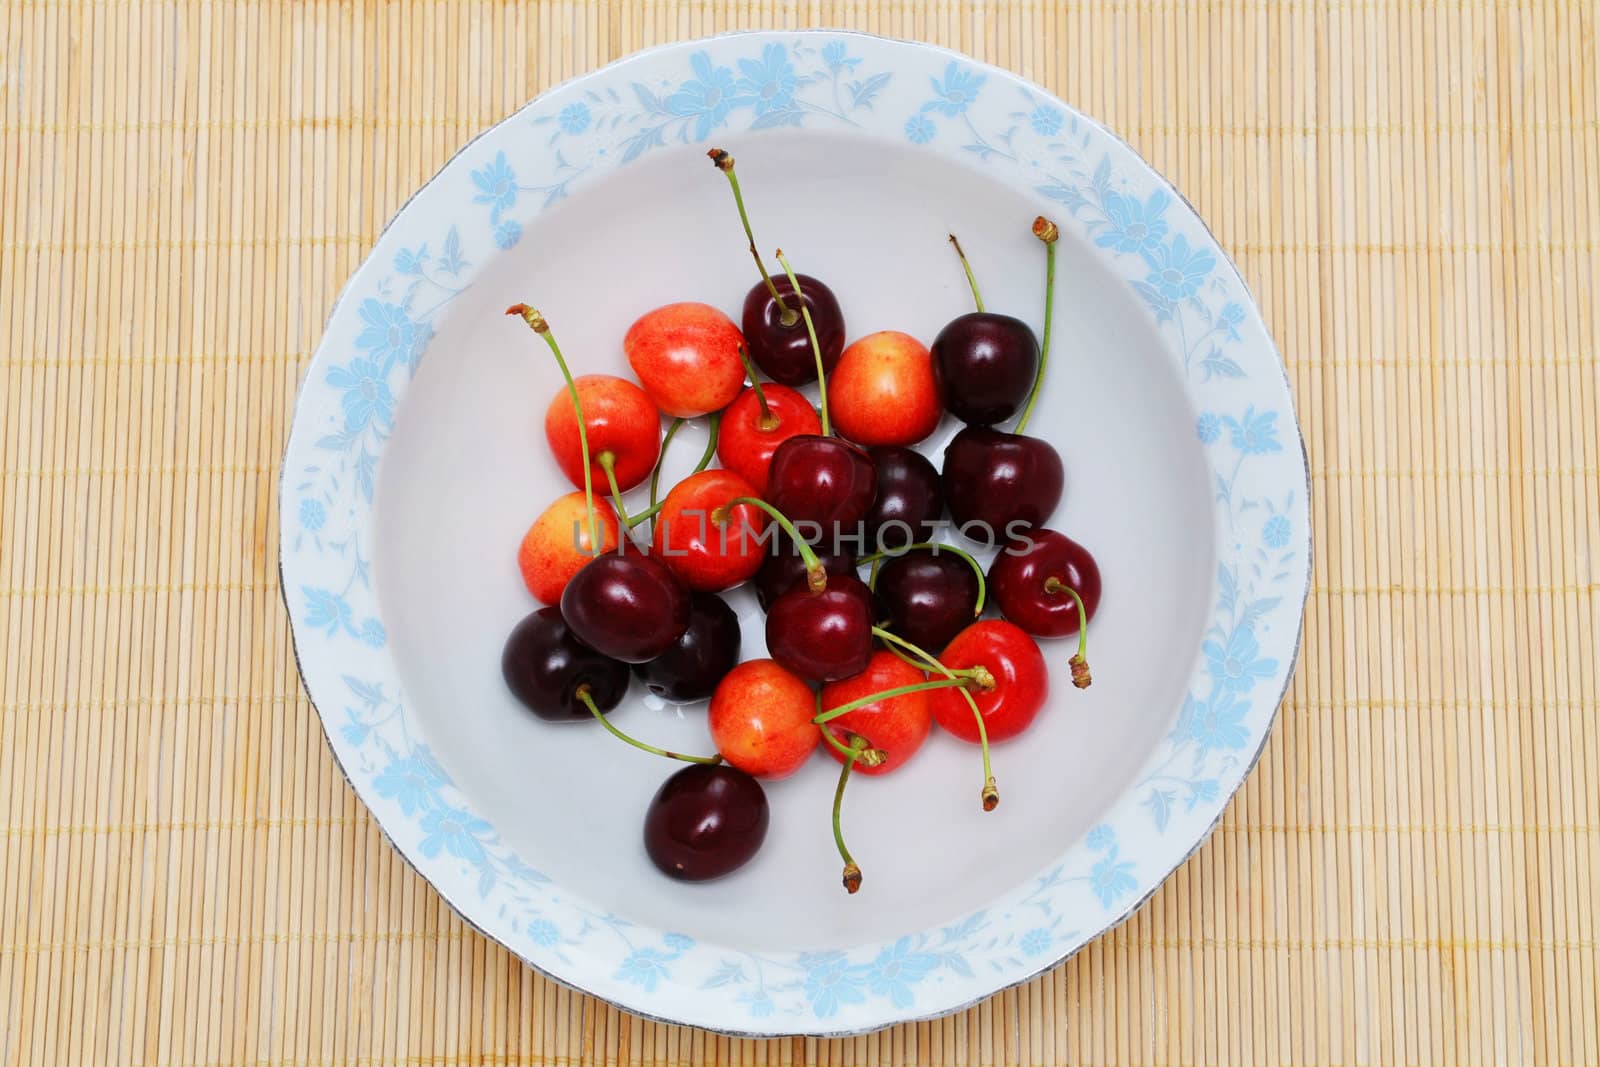 Sweet cherries on the plate